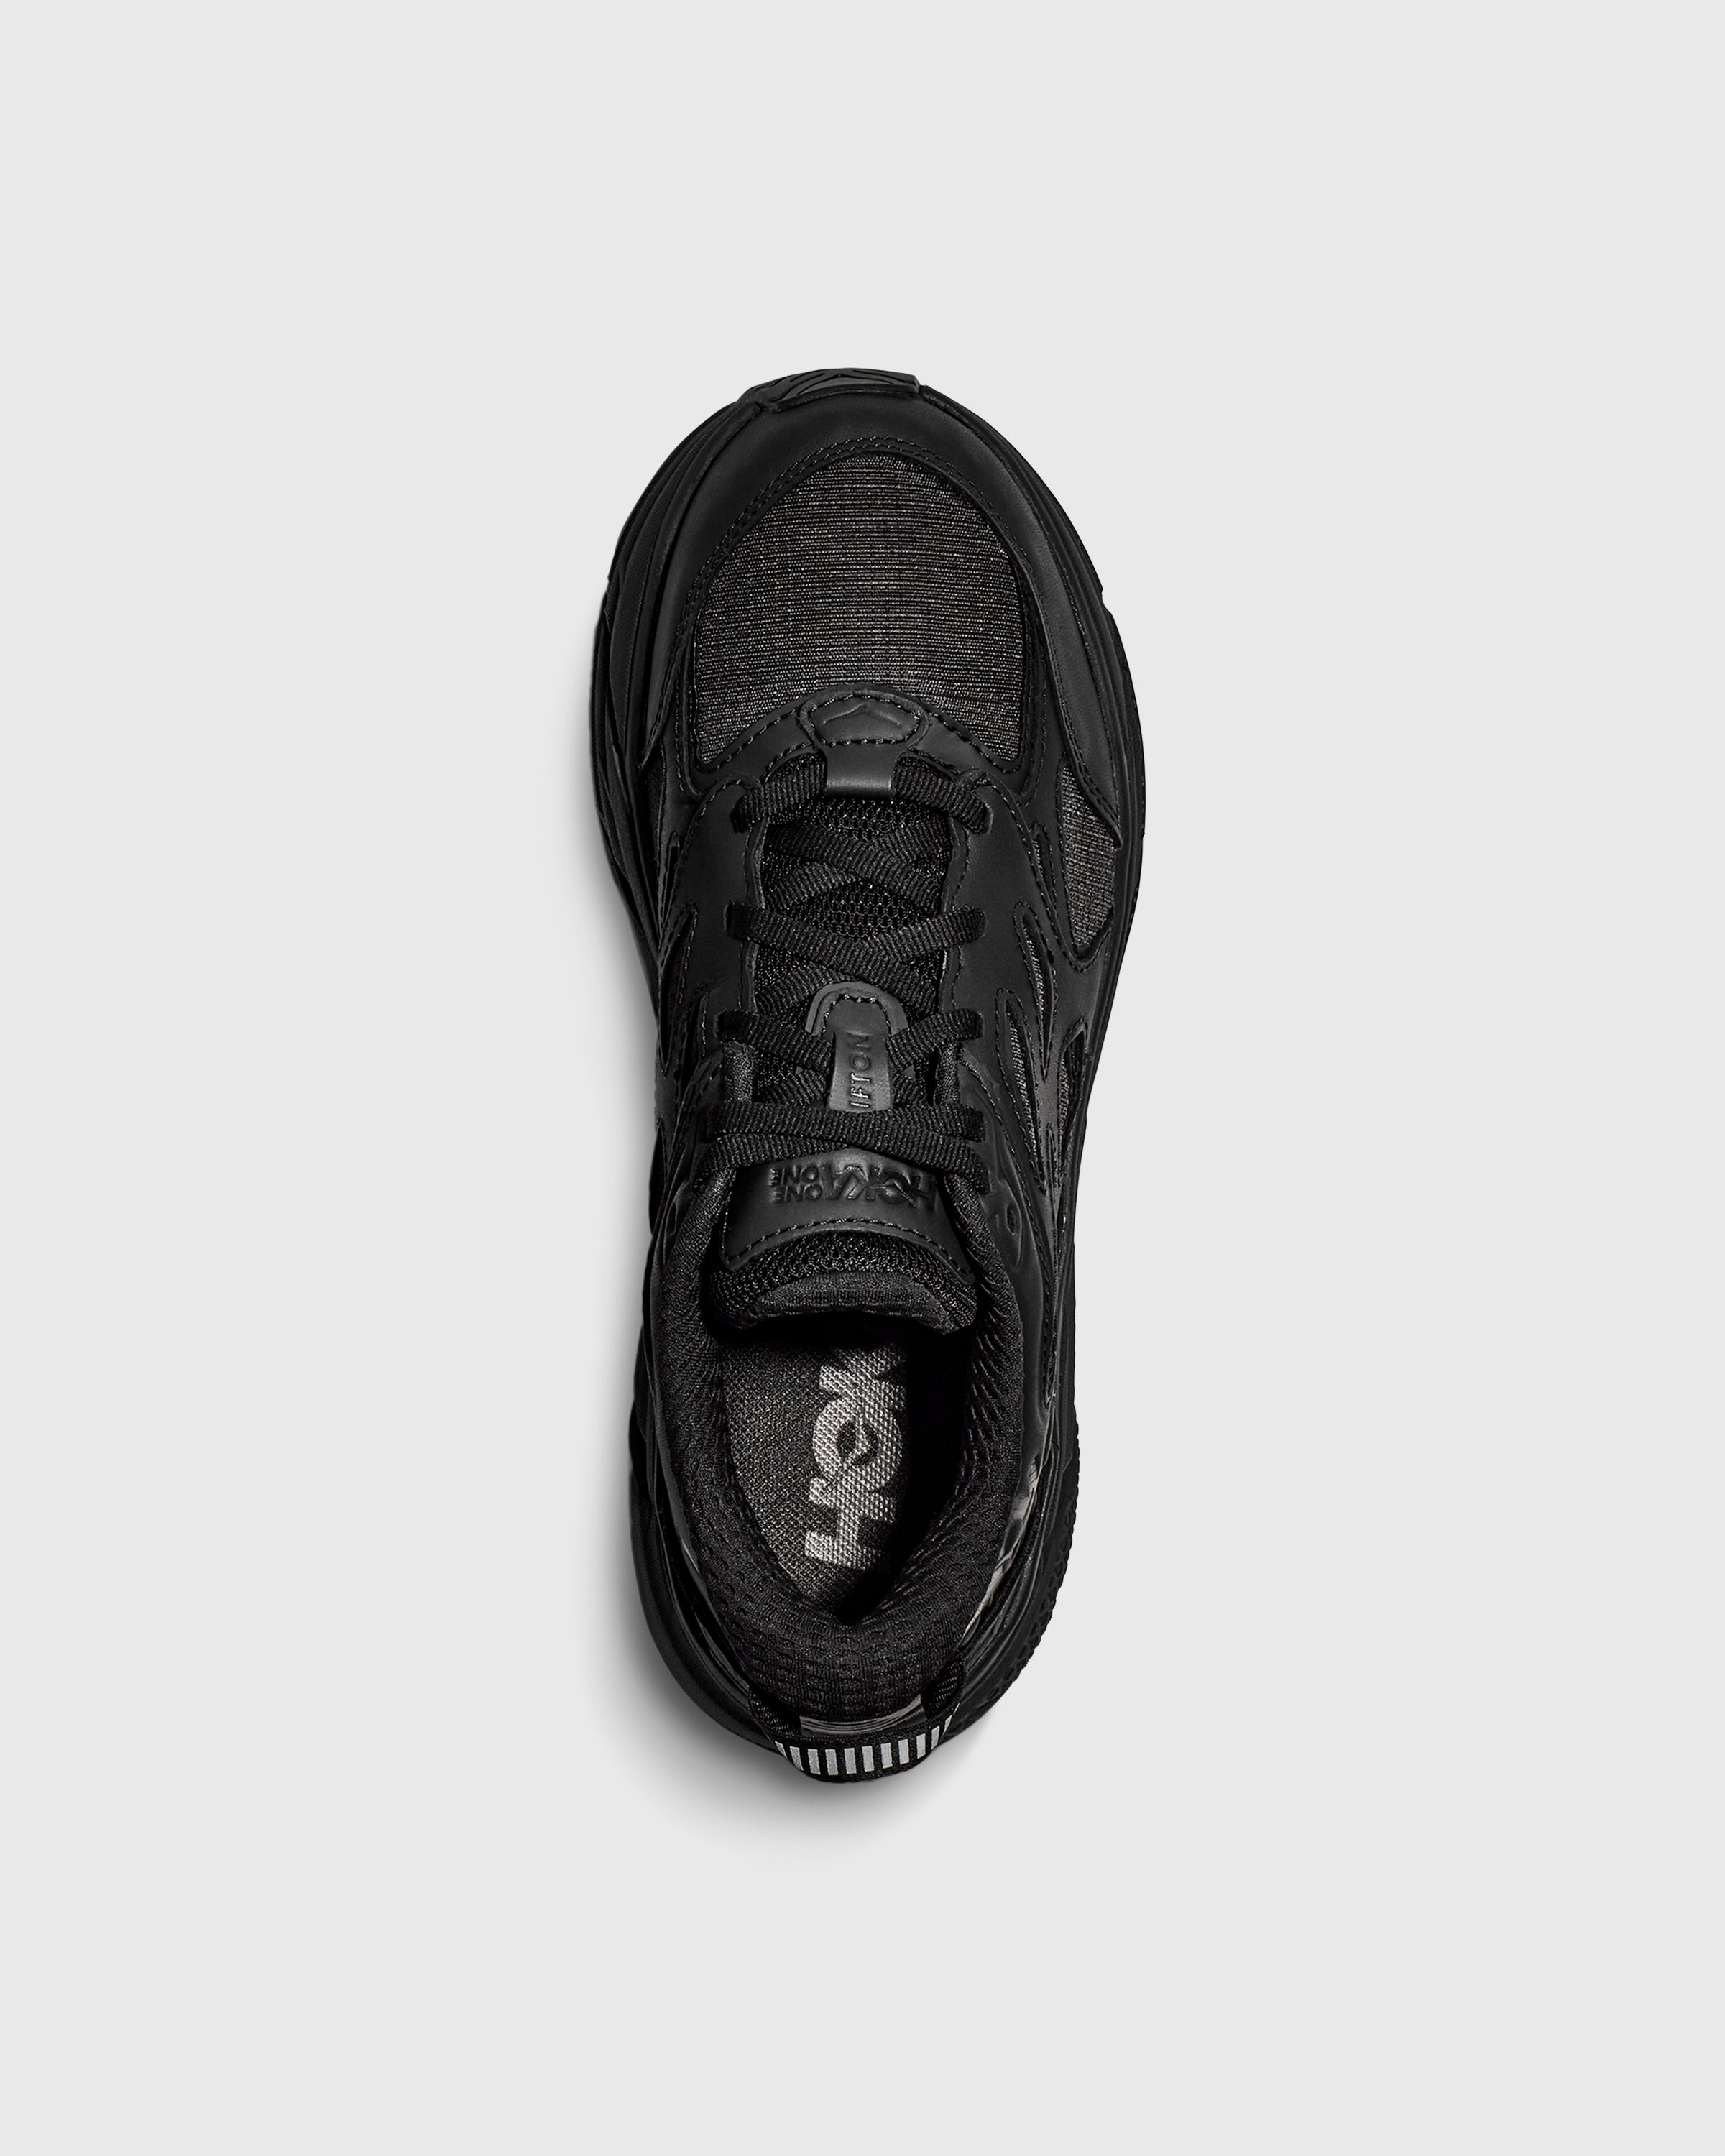 HOKA - CLIFTON L GTX - Footwear - Black - Image 3